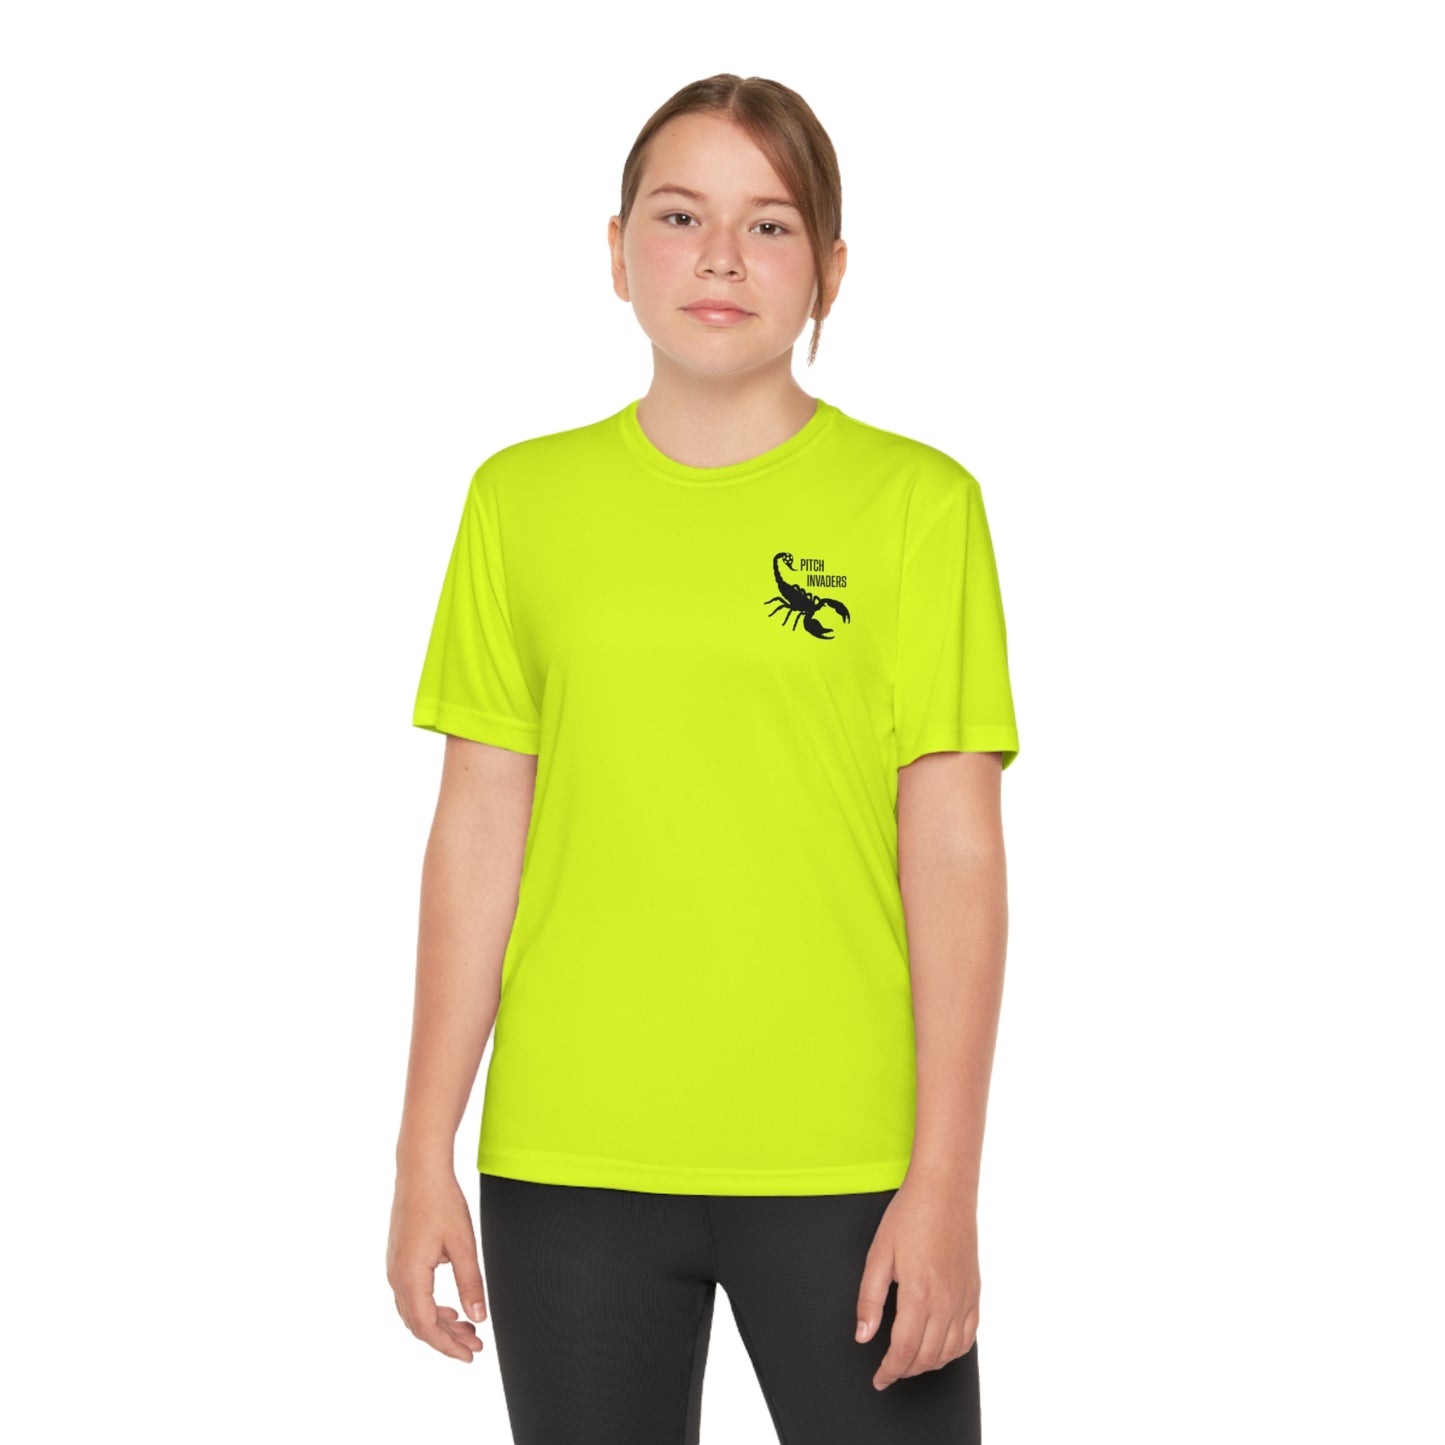 PRESS MACHINE Youth Athletic T-Shirt (Unisex)